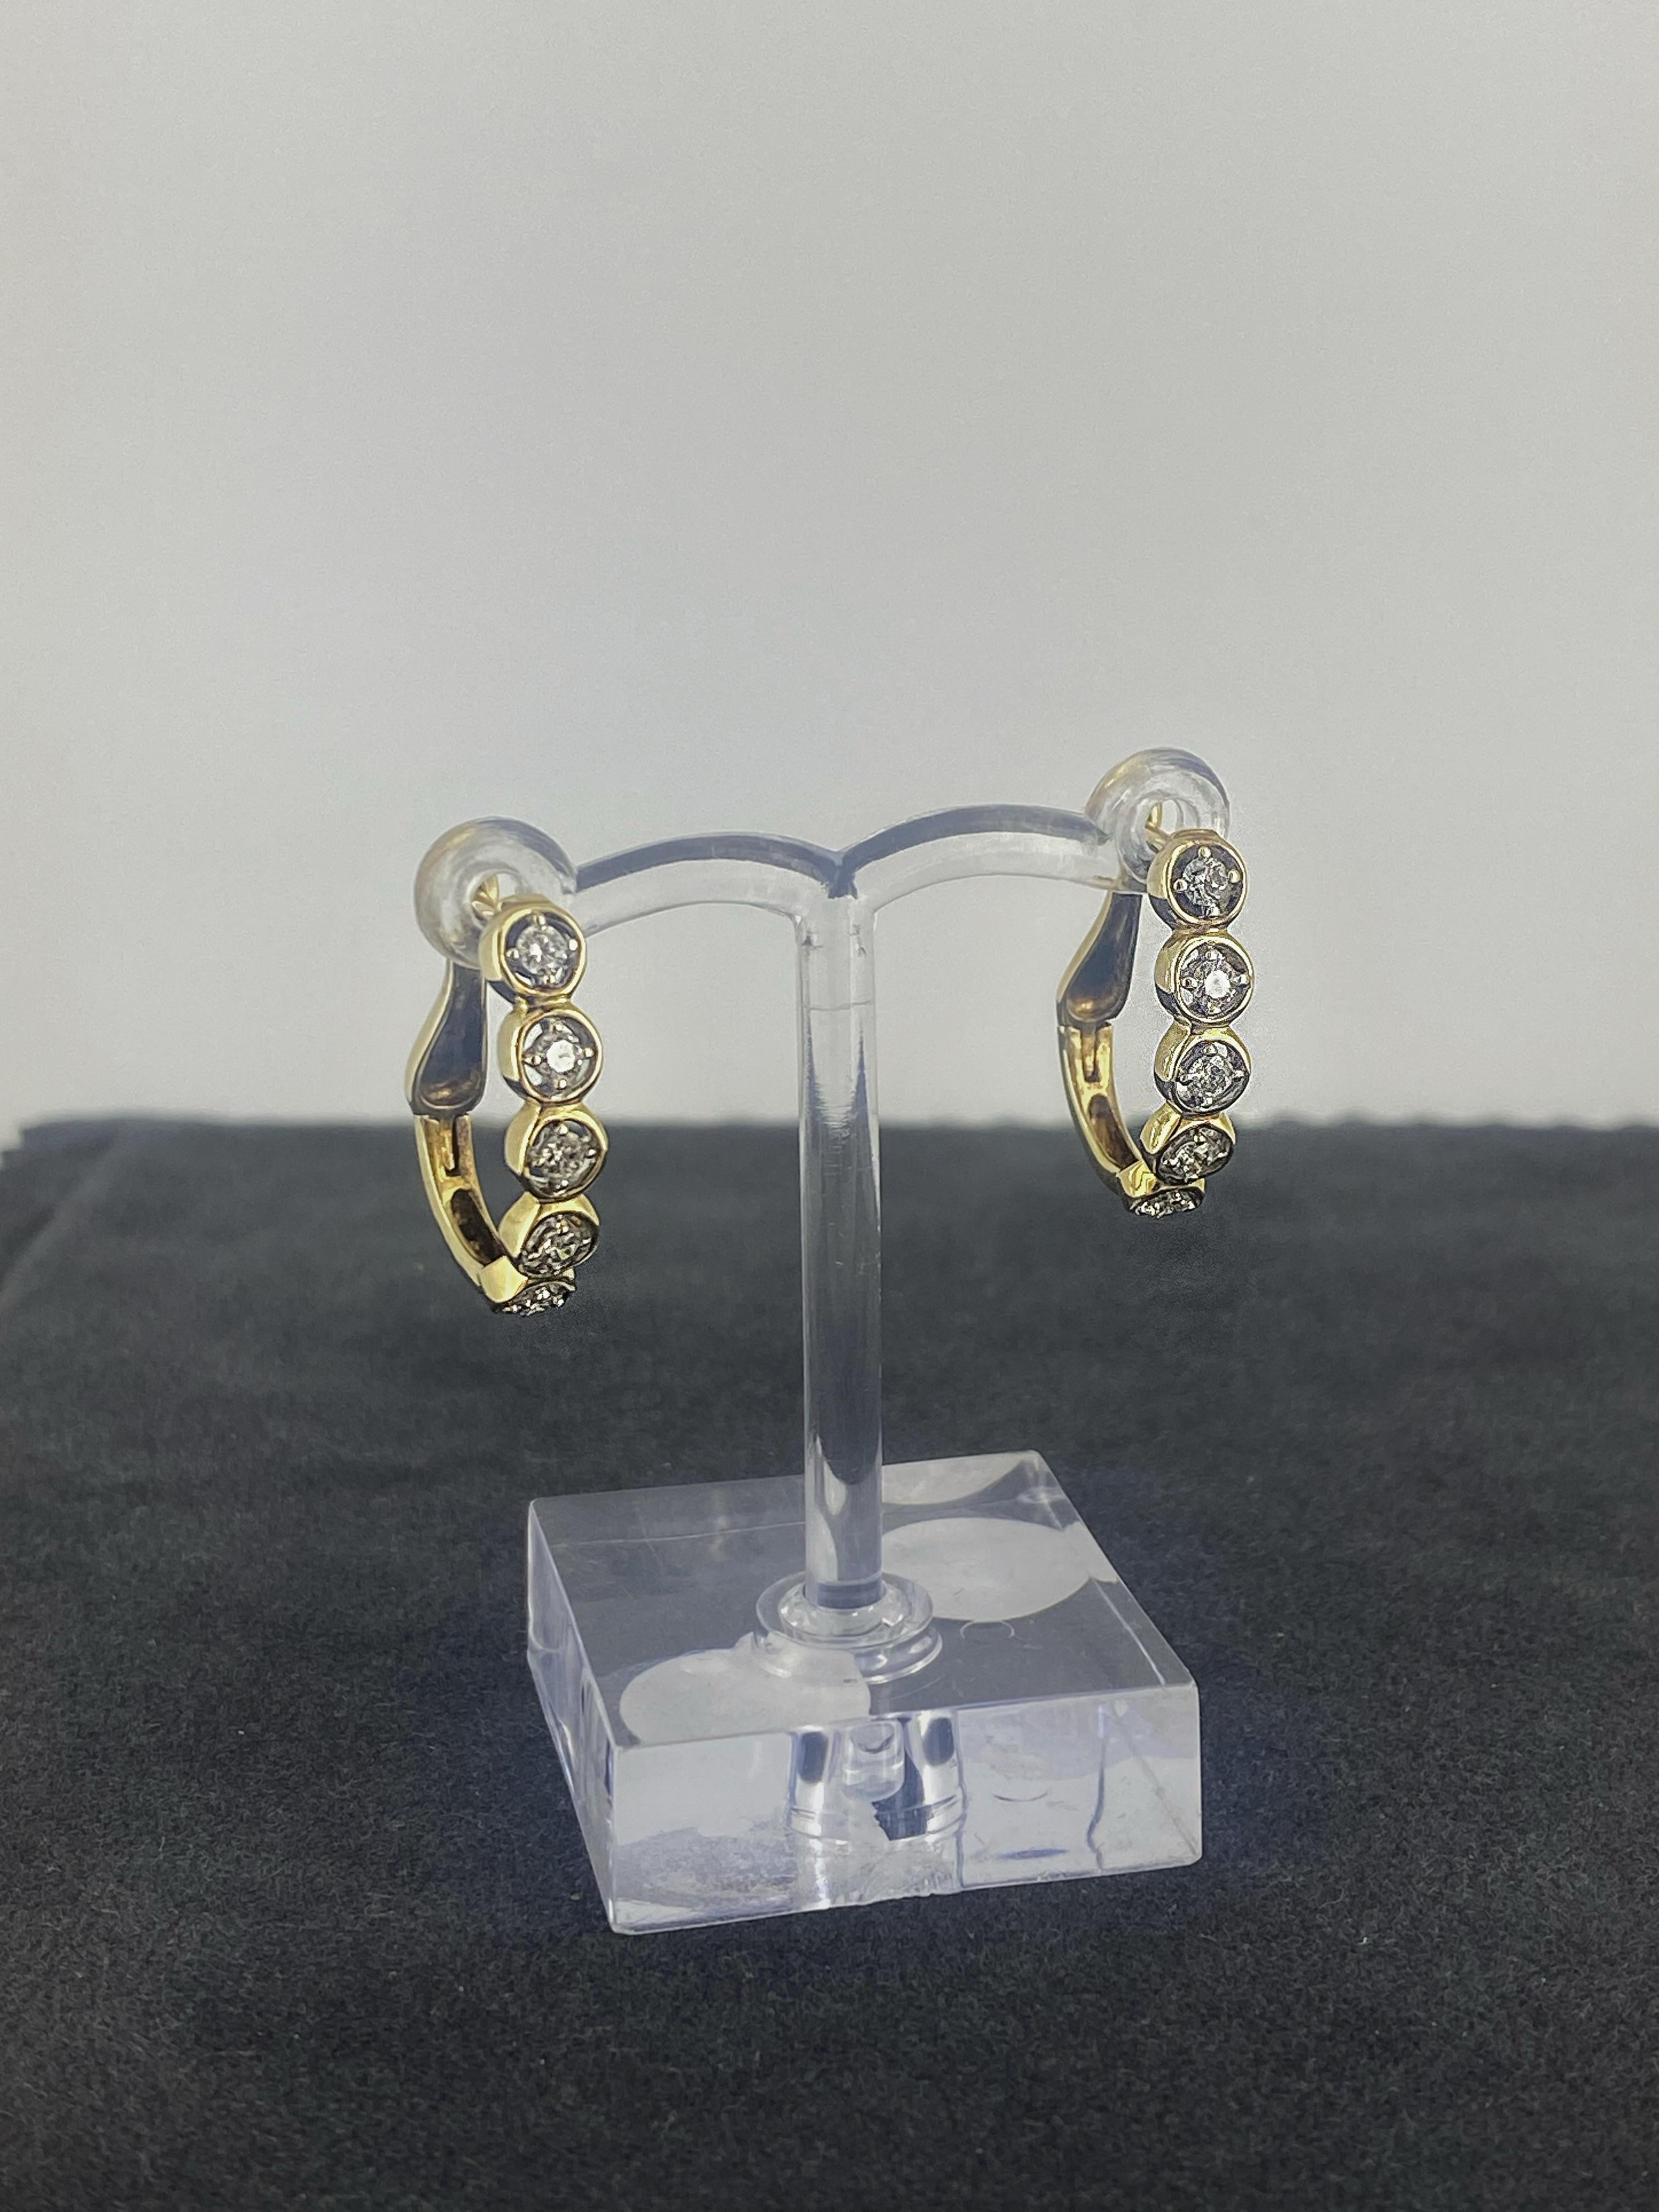 14K Yellow Gold & 0.80ct Diamond Half Hoop Earrings, English Locks, 22mm long. For Sale